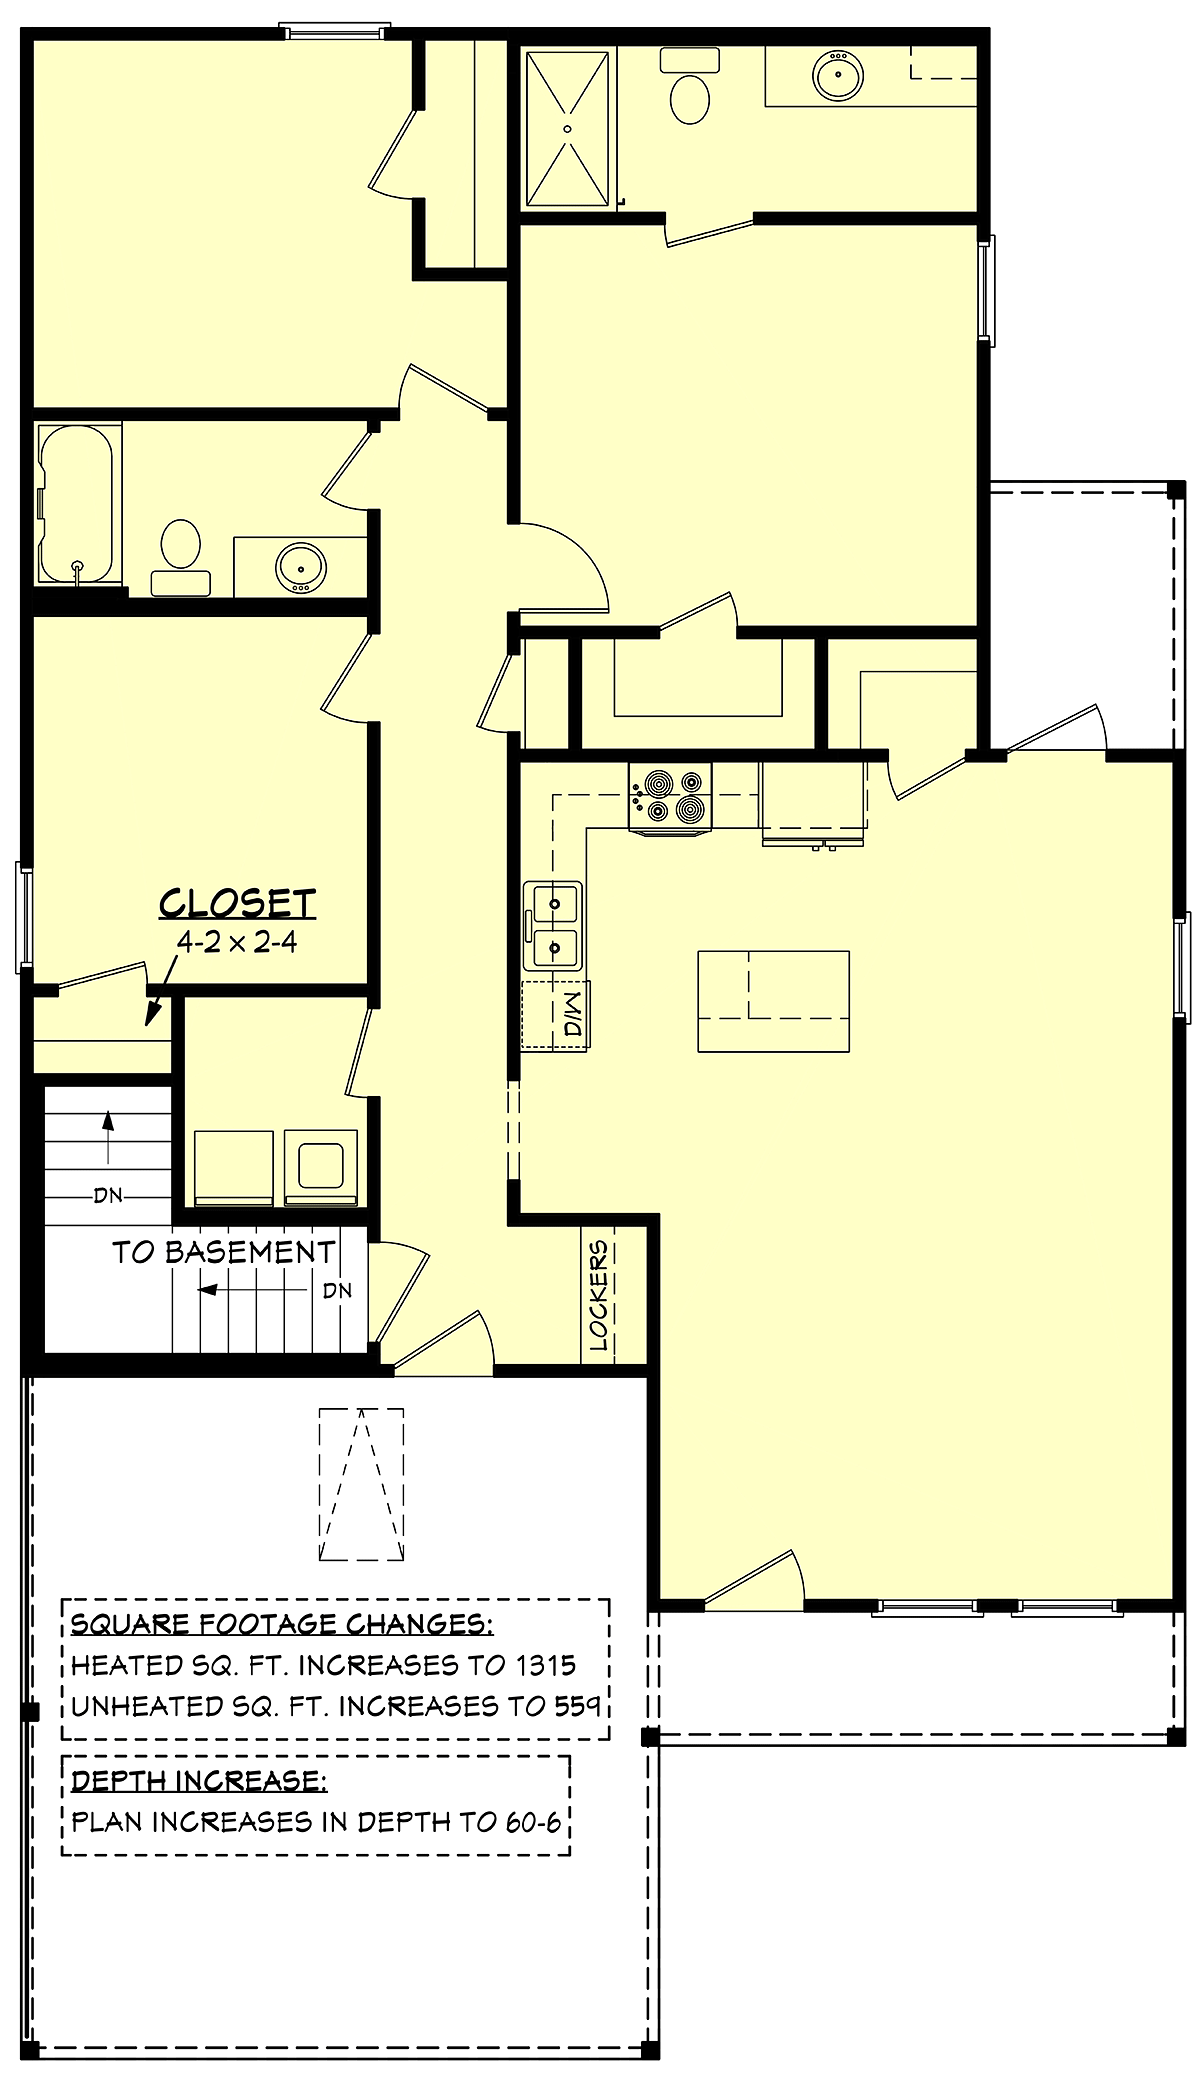 House Plan 80882 Alternate Level One